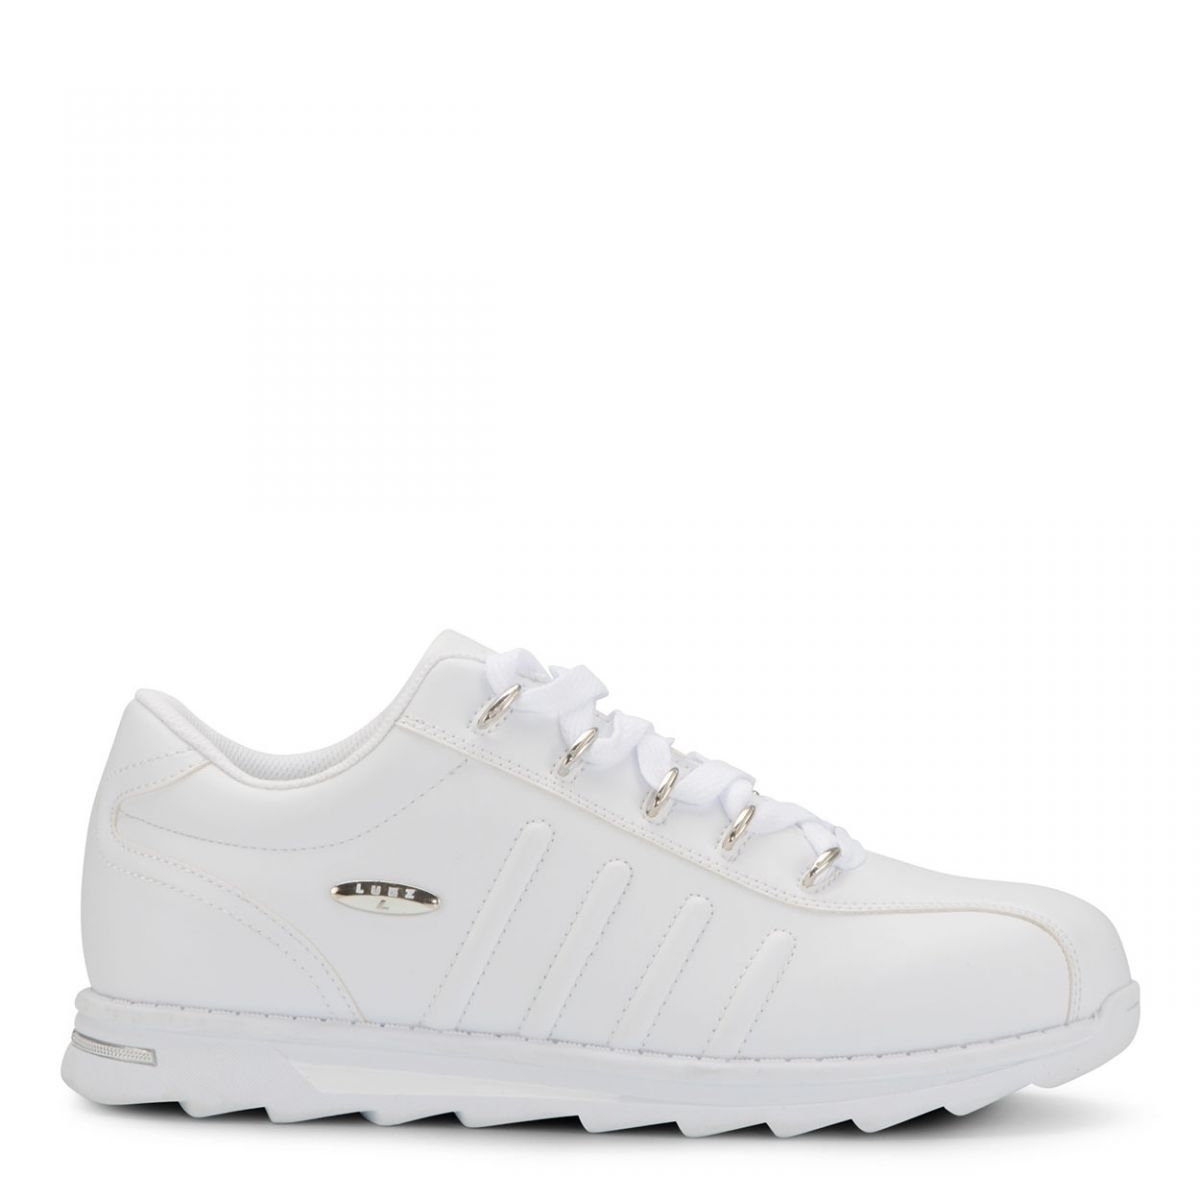 Lugz Men's Changeover II Sneaker White - MCHGIIV-100 WHITE - WHITE, 10.5